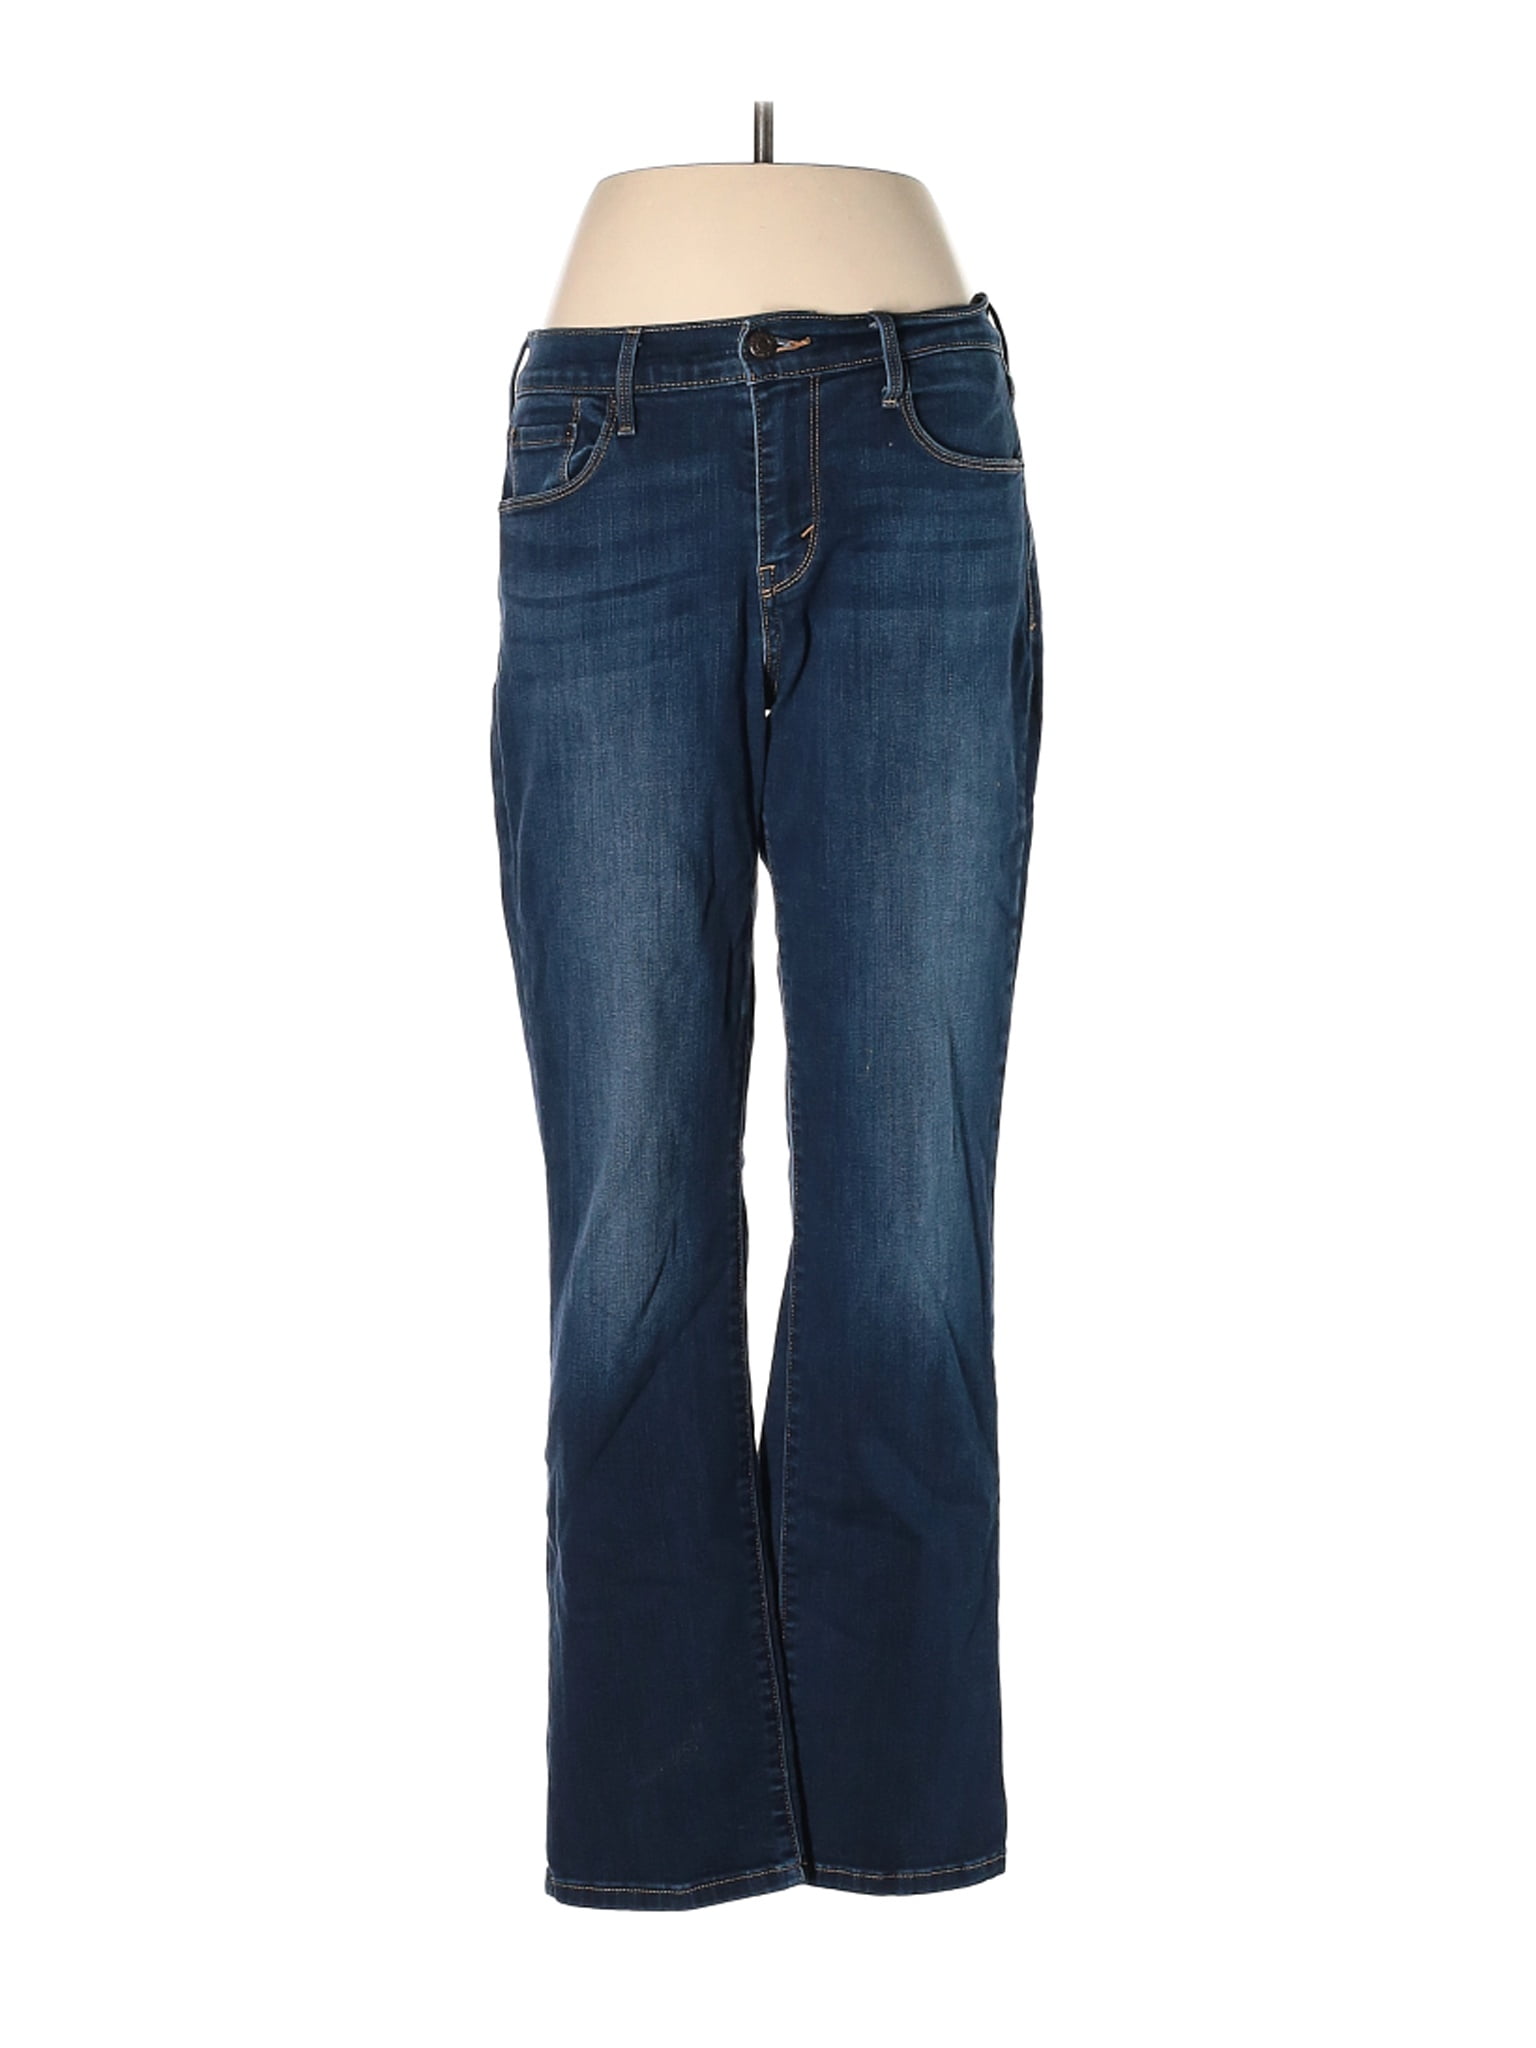 size 8 levi jeans womens